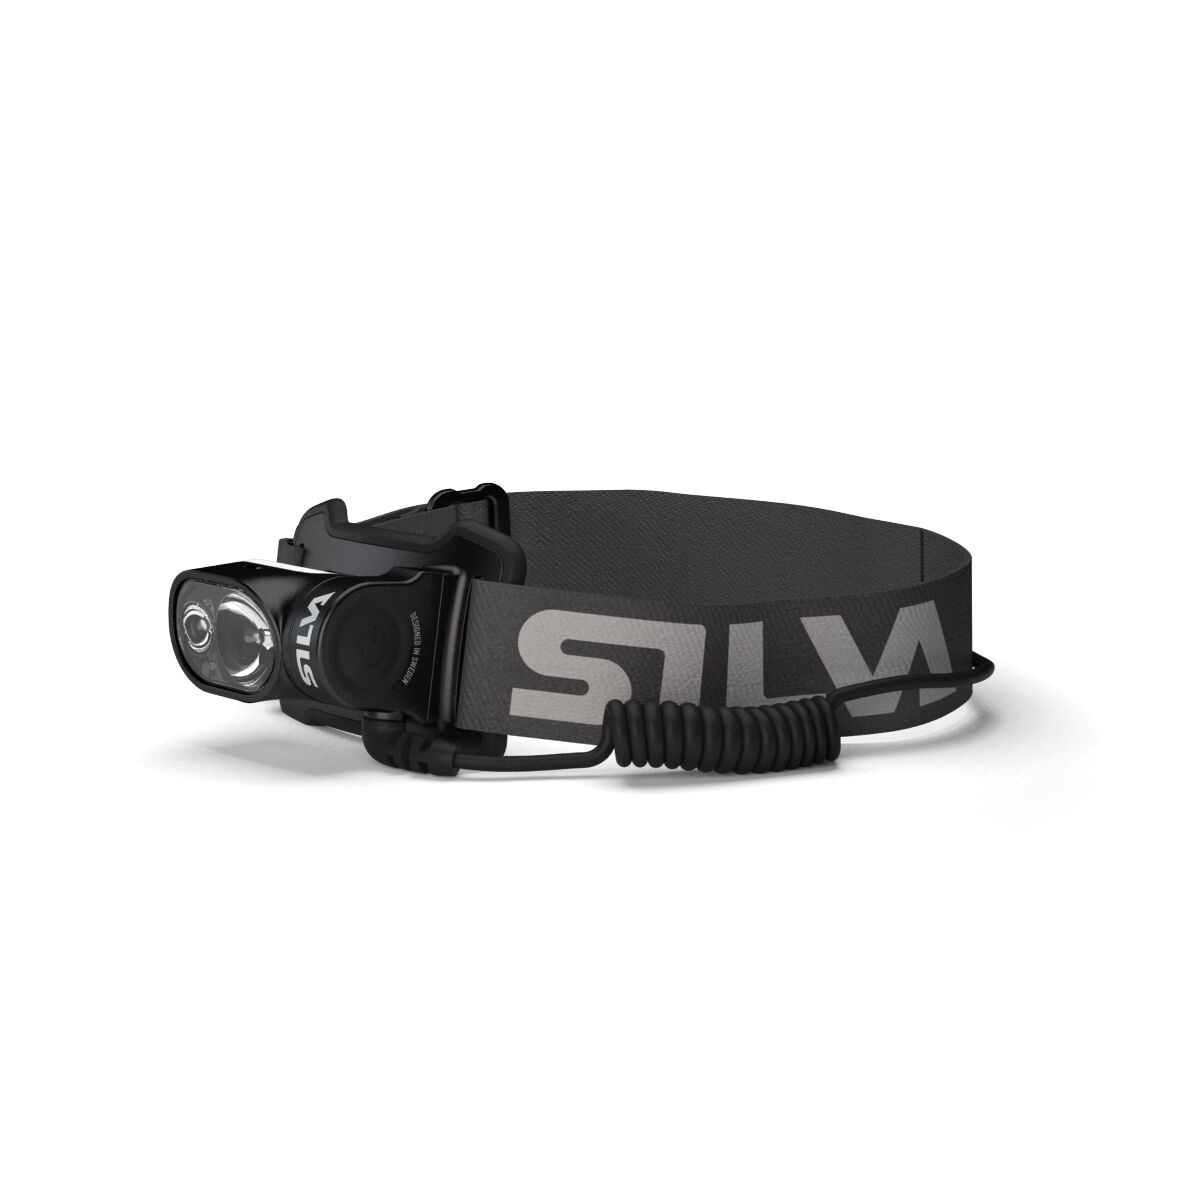 Silva Cross Trail 6 - Stirnlampe